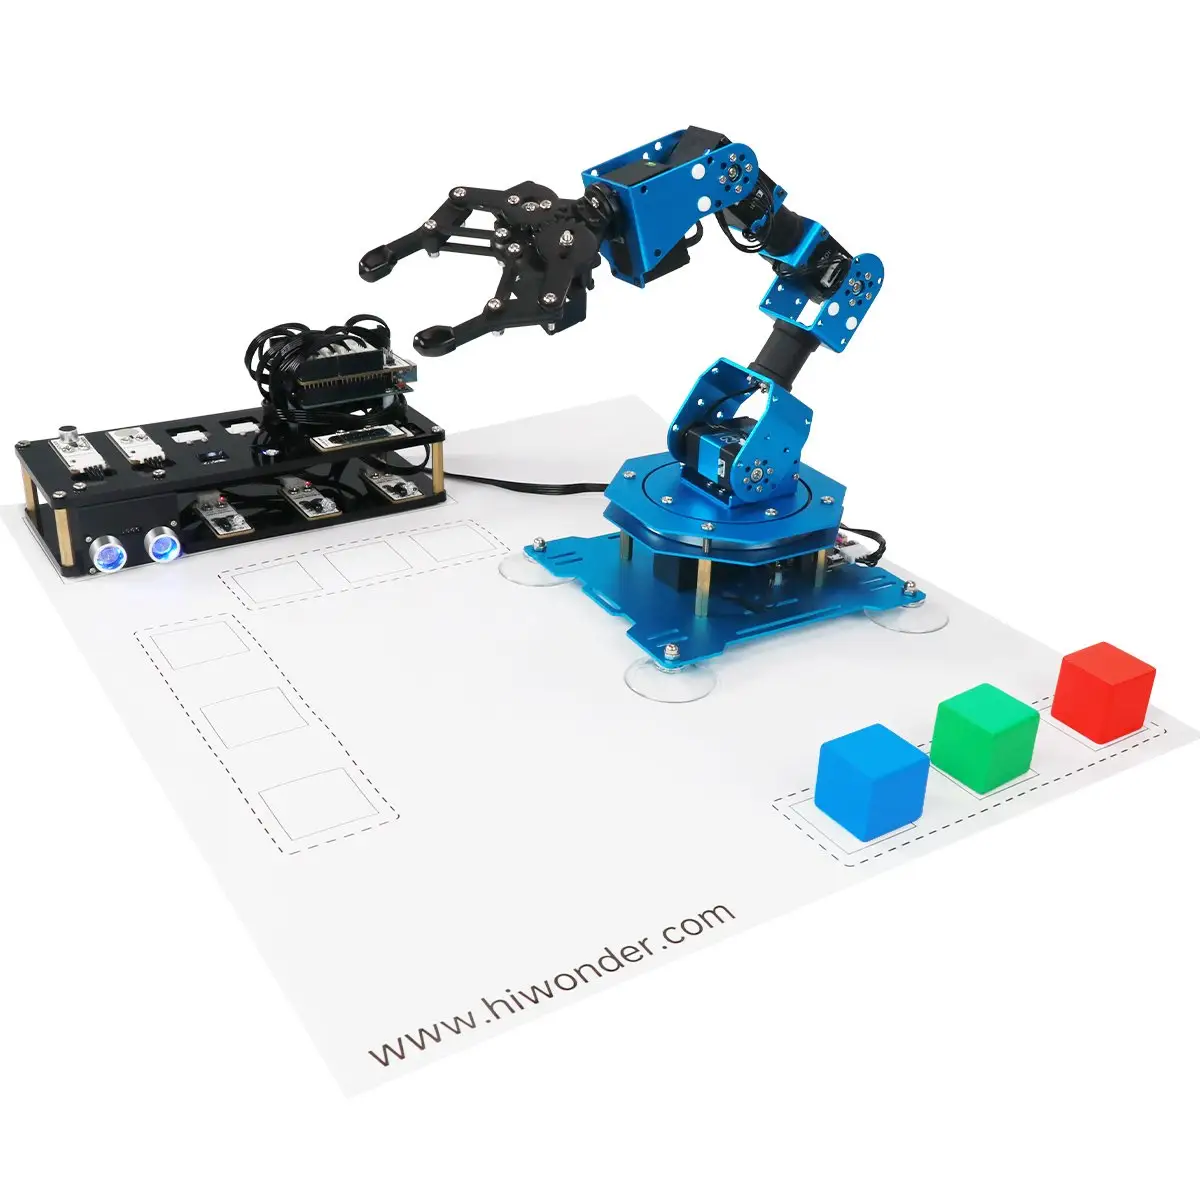 Metal Robot Educational Arm with Arduino Secondary Development Sensor Kit for Robot DIY